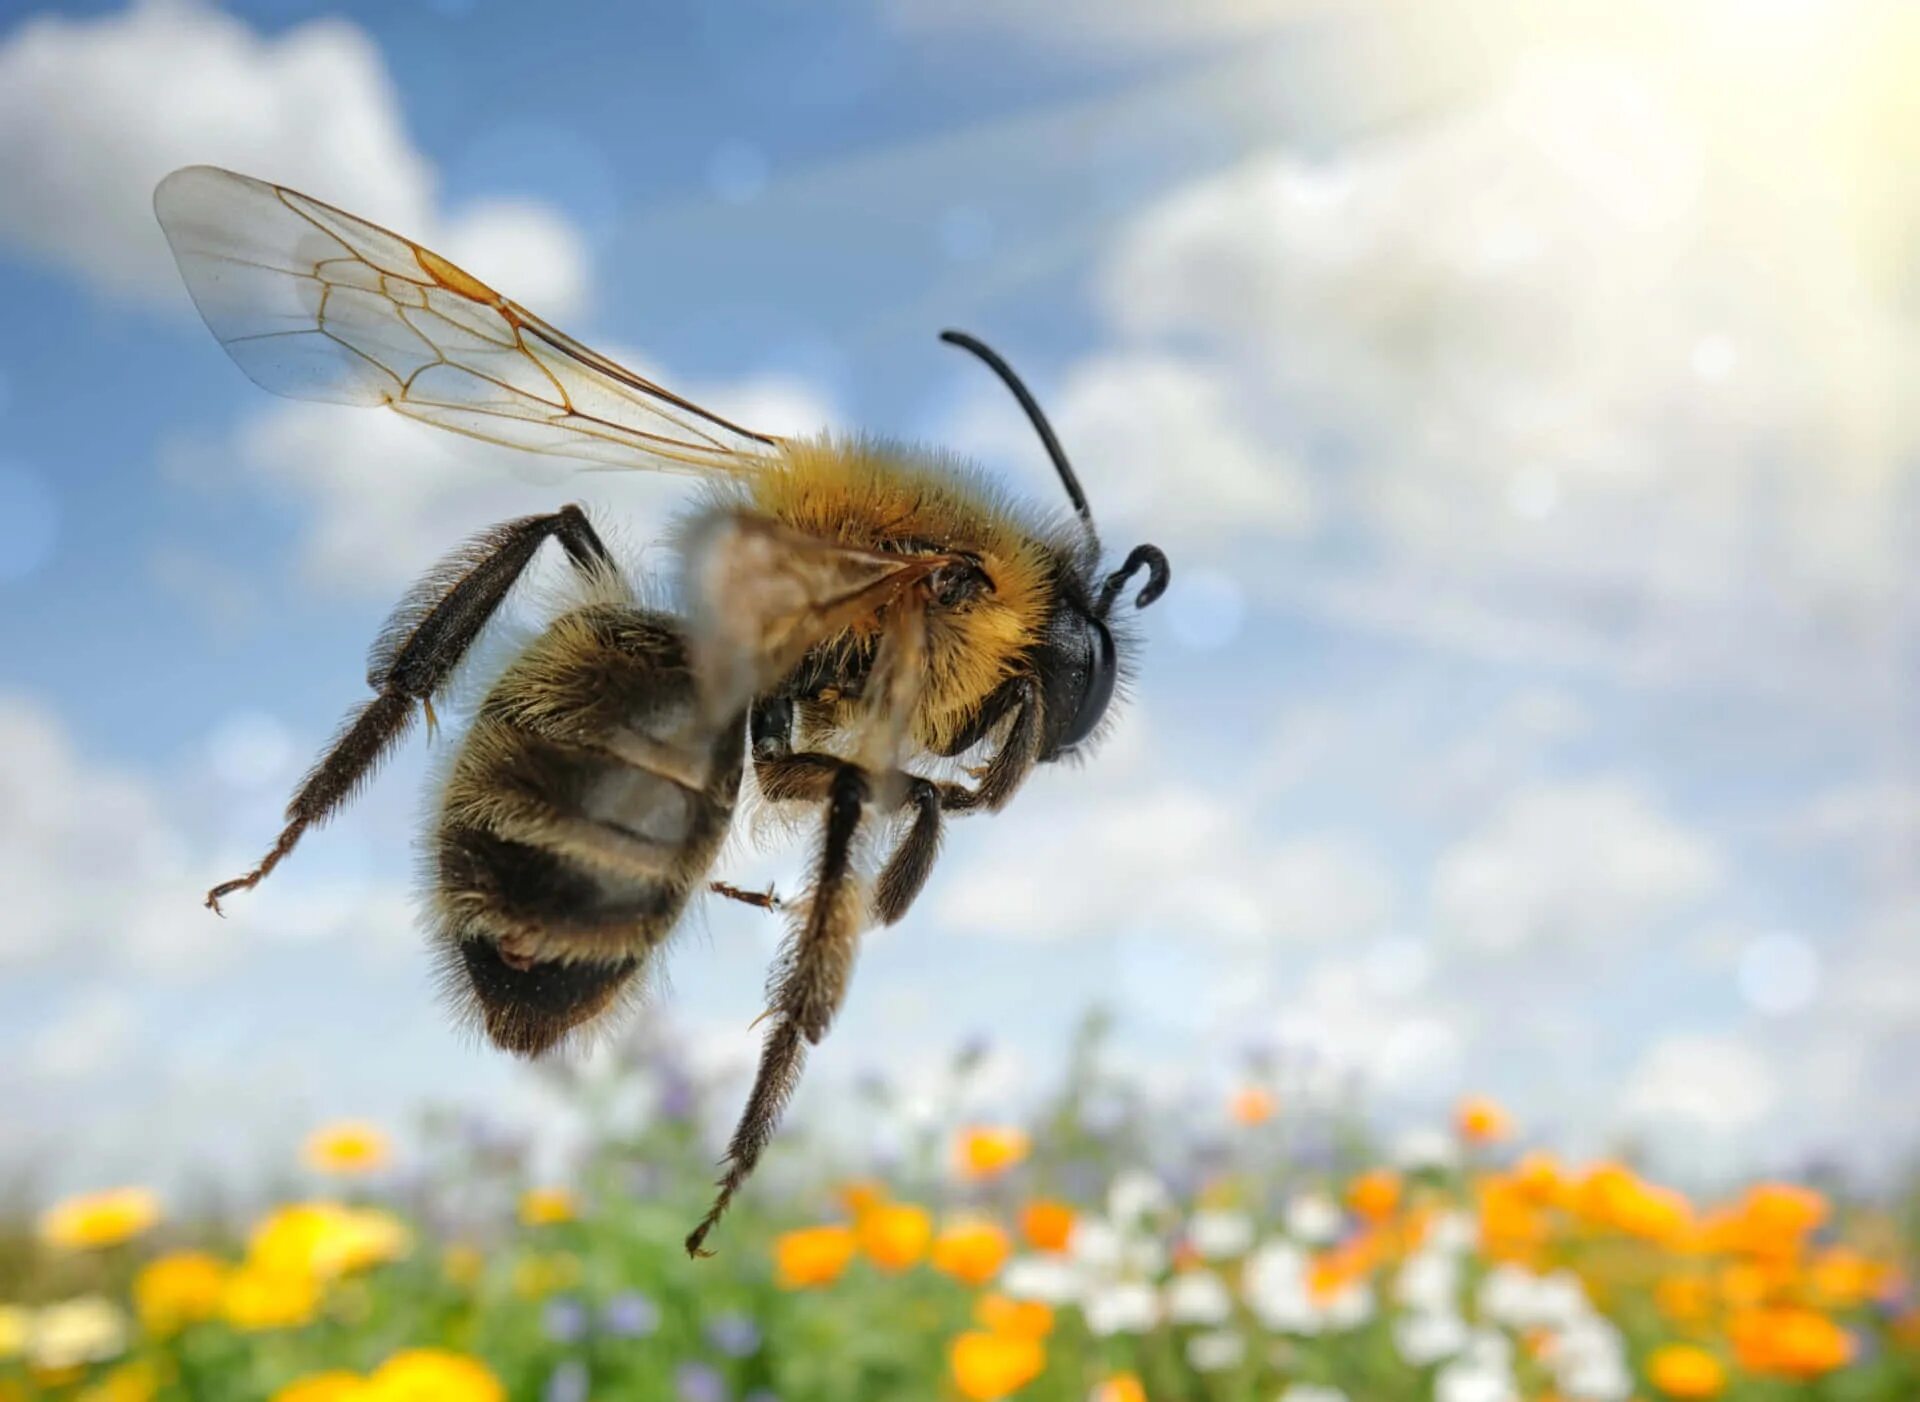 Bee fly. Пчела. Пчела в полете. Пчела летит. Полет пчелы.